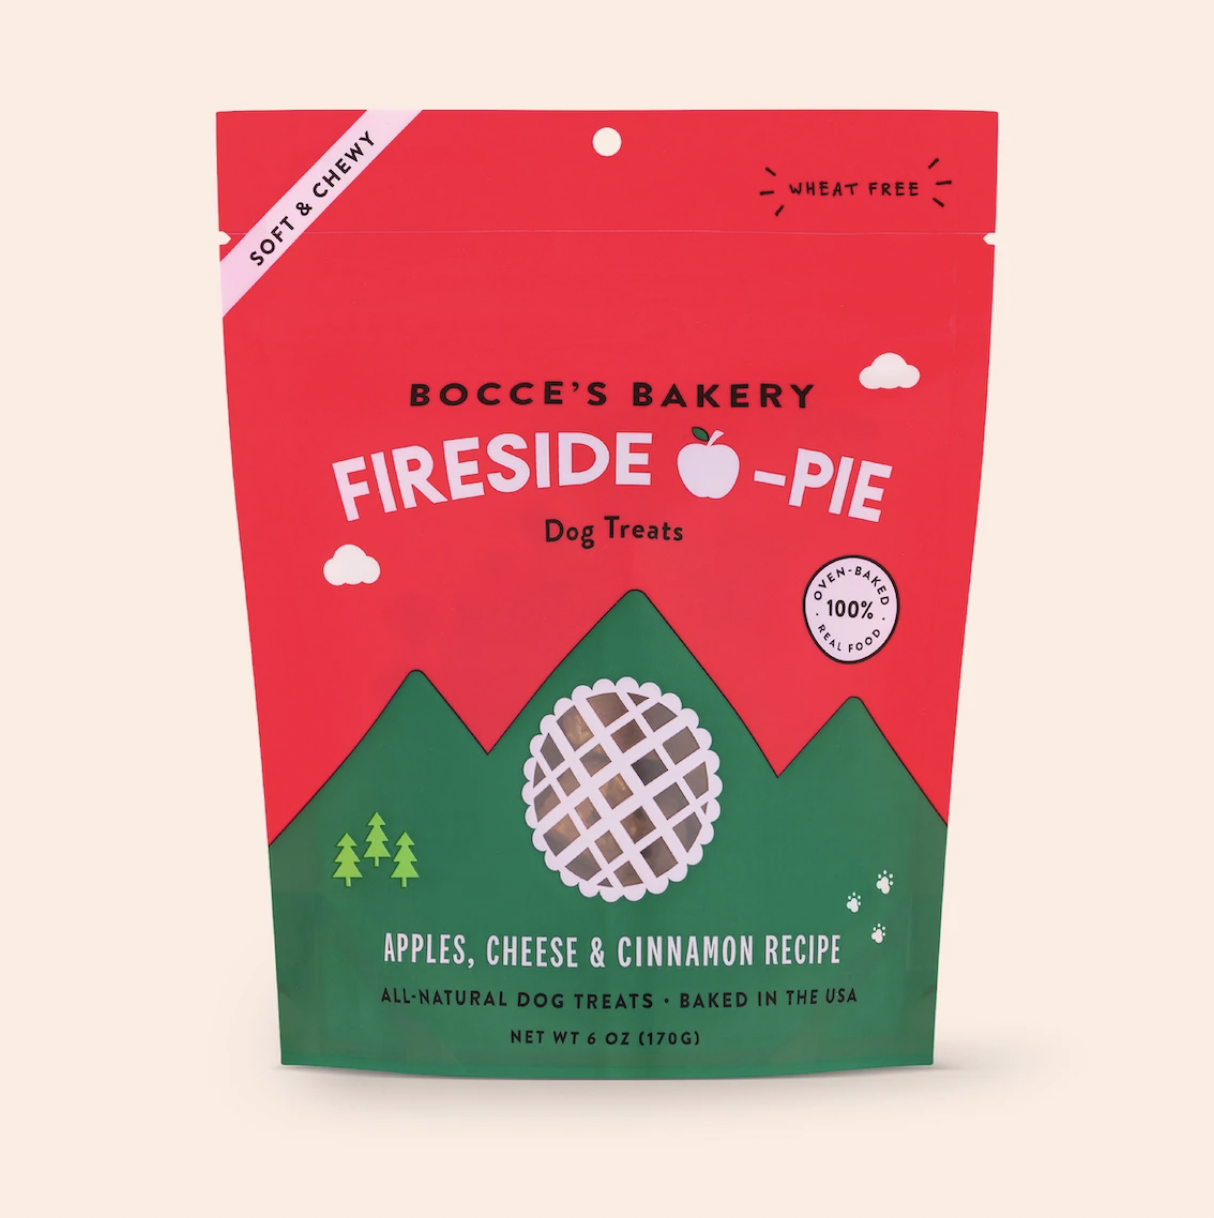 Fireside Apple Pie - Soft & Chewy - BOCCE